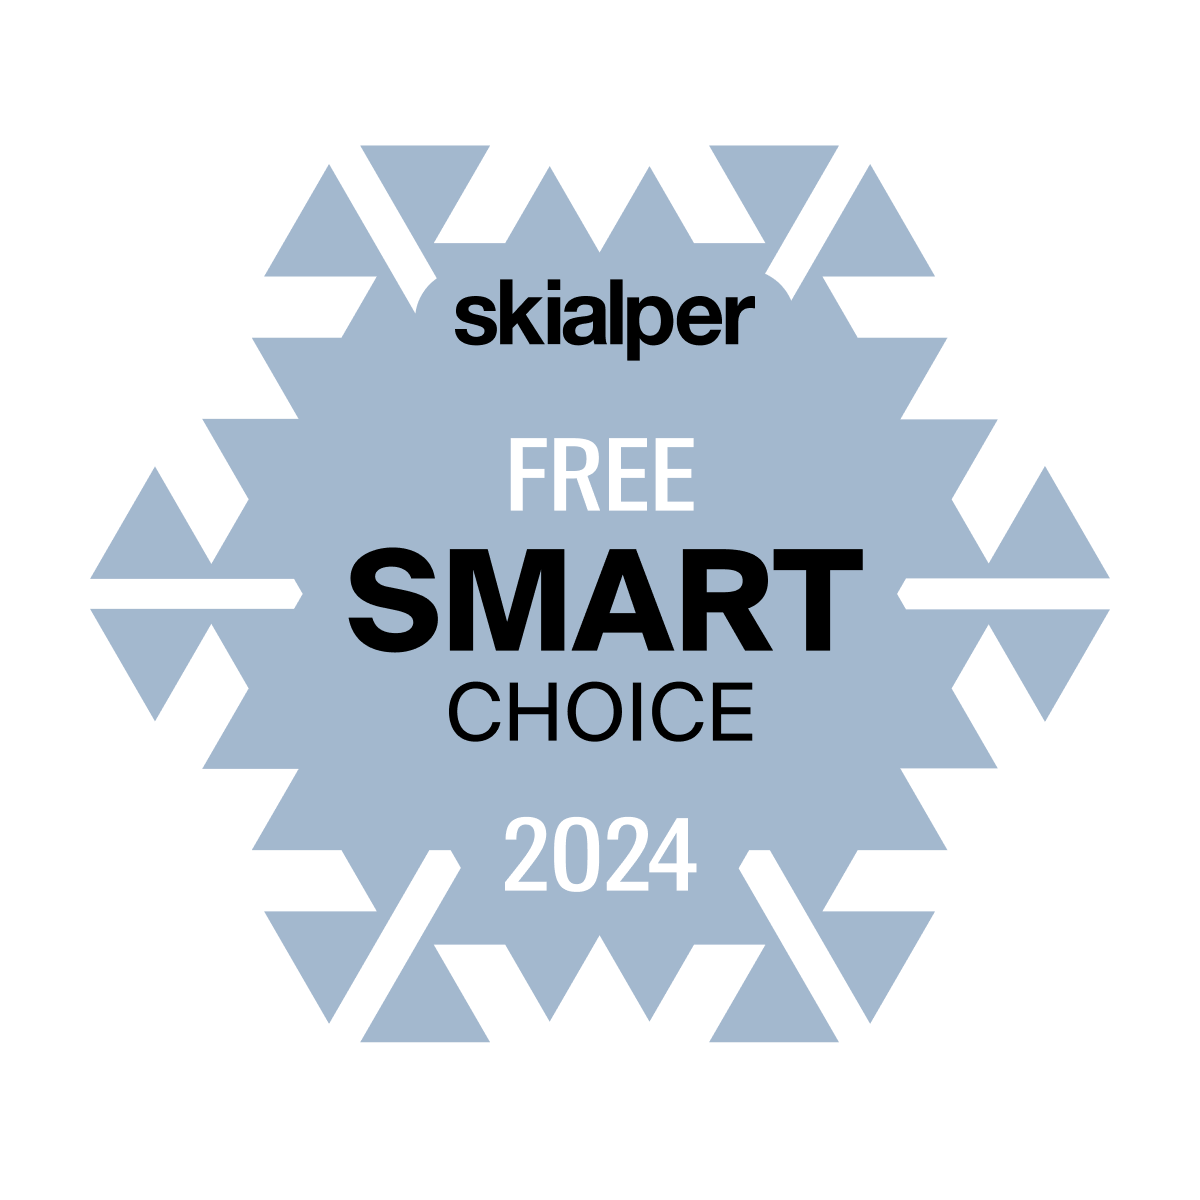 Smart choice Free